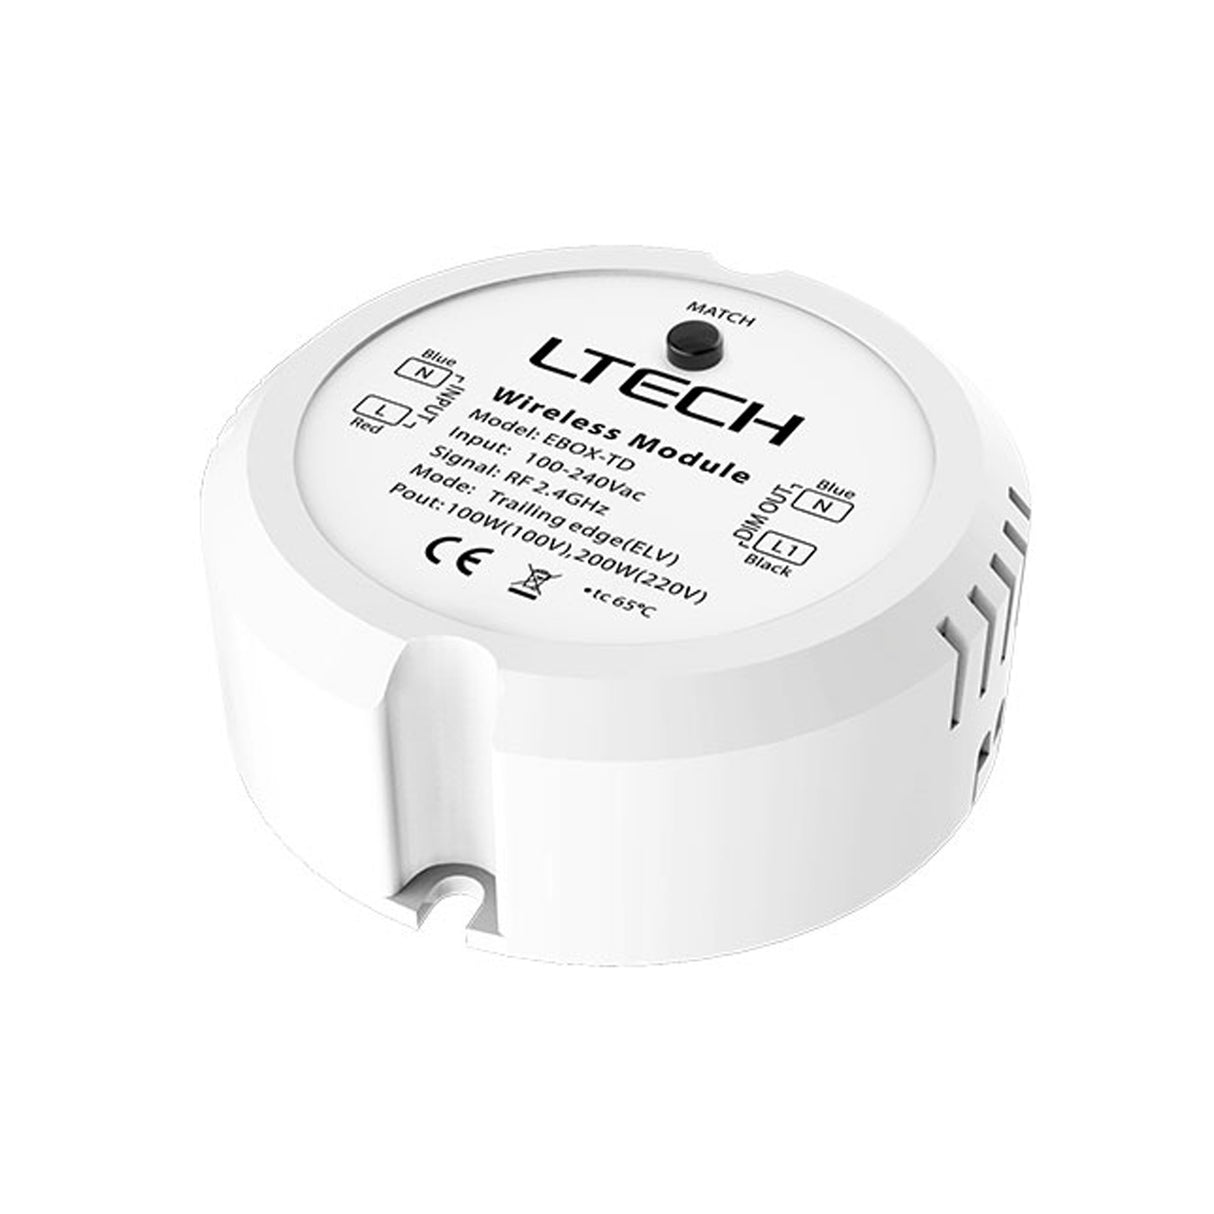 Ltech EBOX-TD LBUS Wireless Module - Triac Dimmer